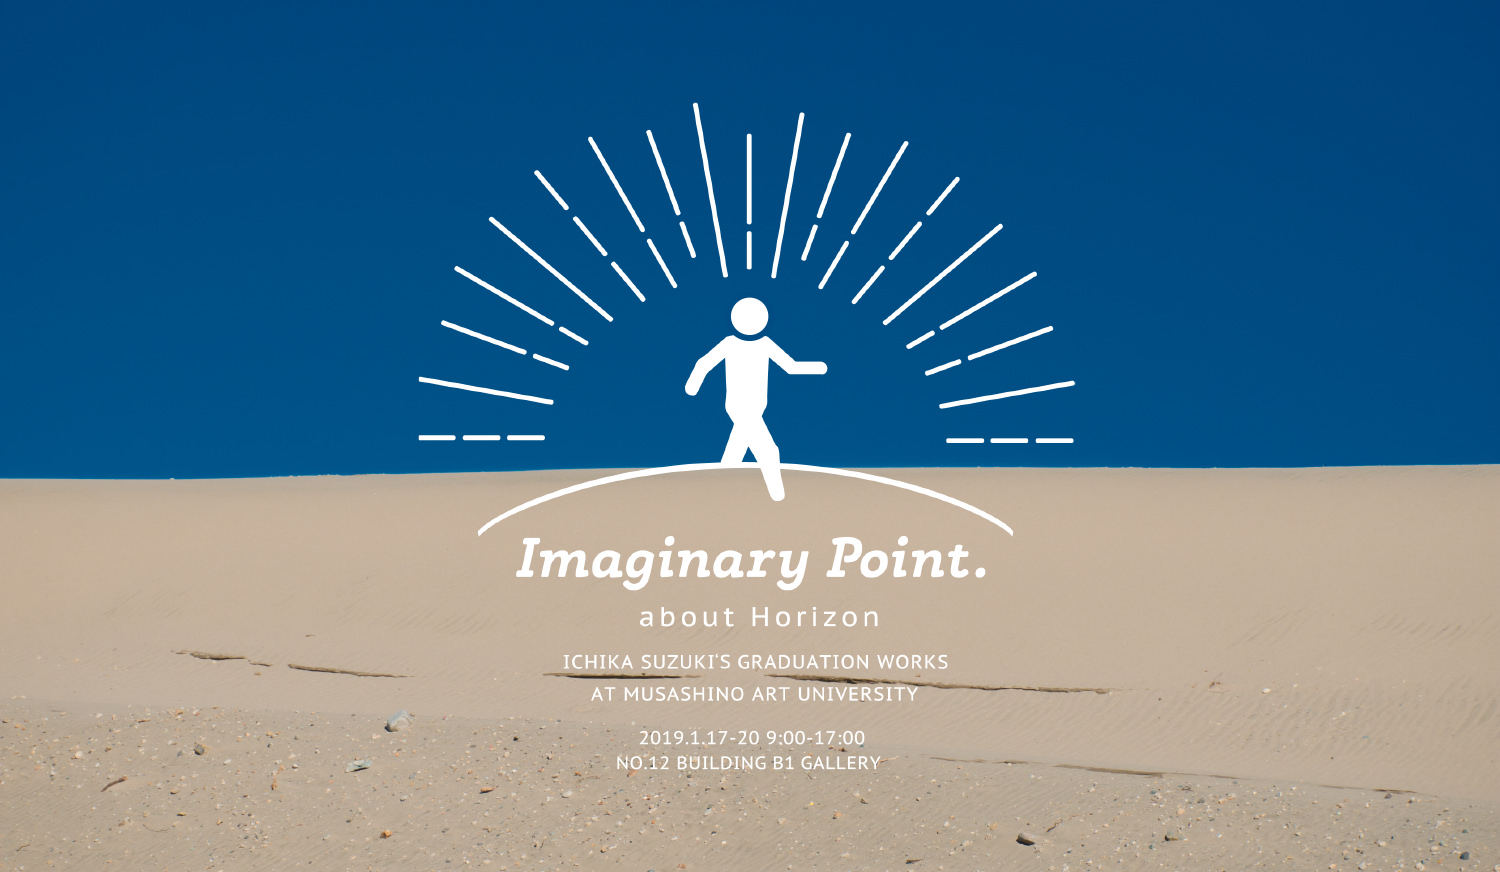 Imaginary Point